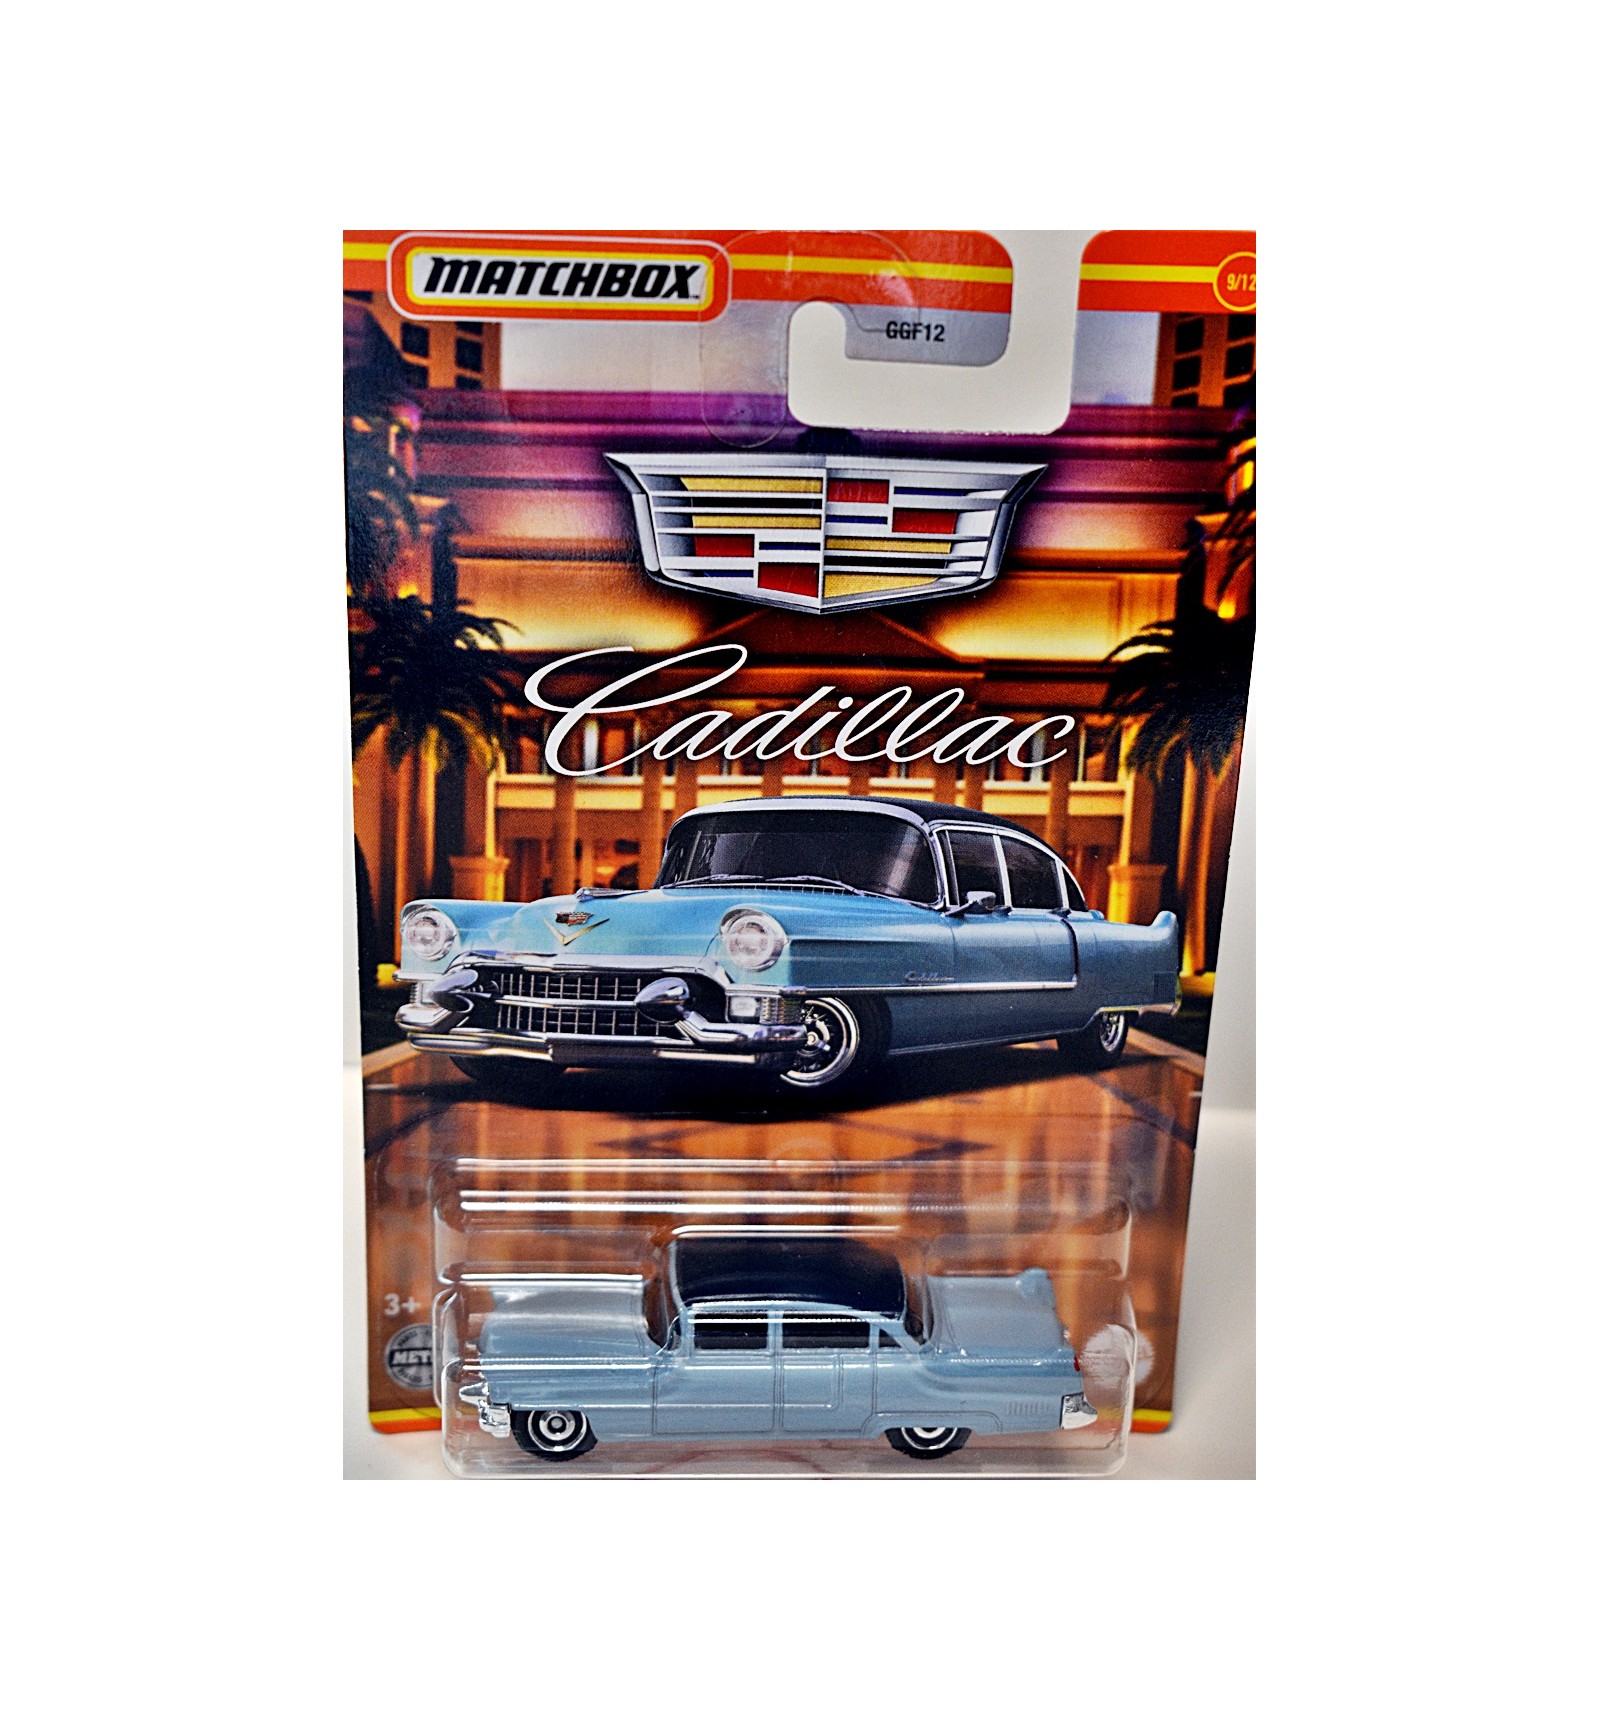 Neuf en boite. 55 Cadillac Fleetwood Matchbox Cadillac Series 